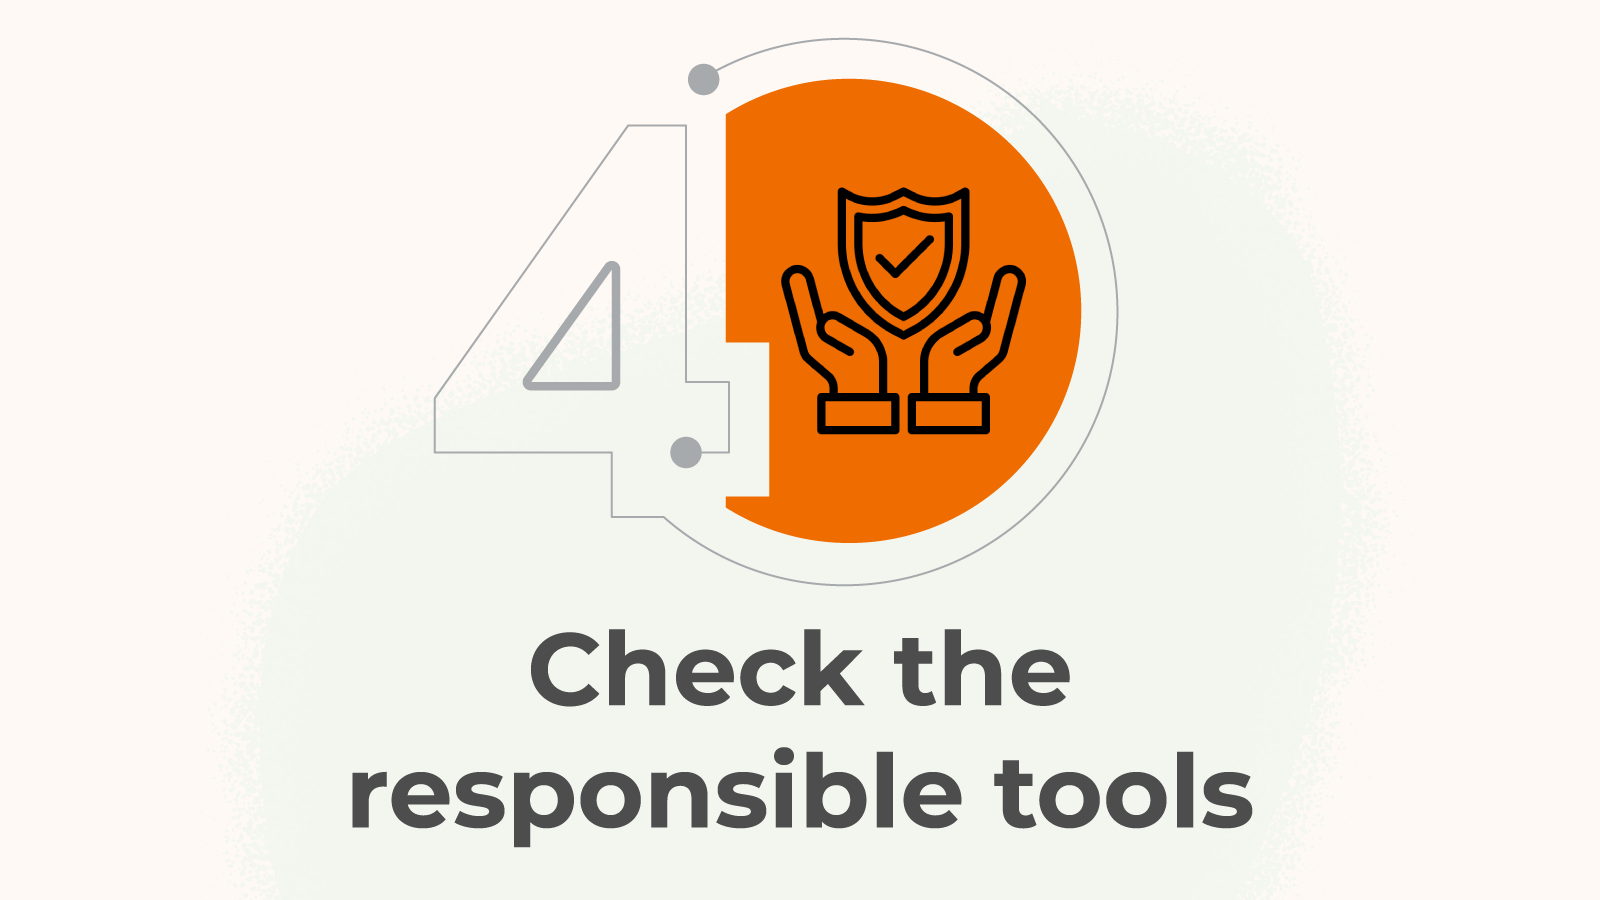 Check the responsible tools